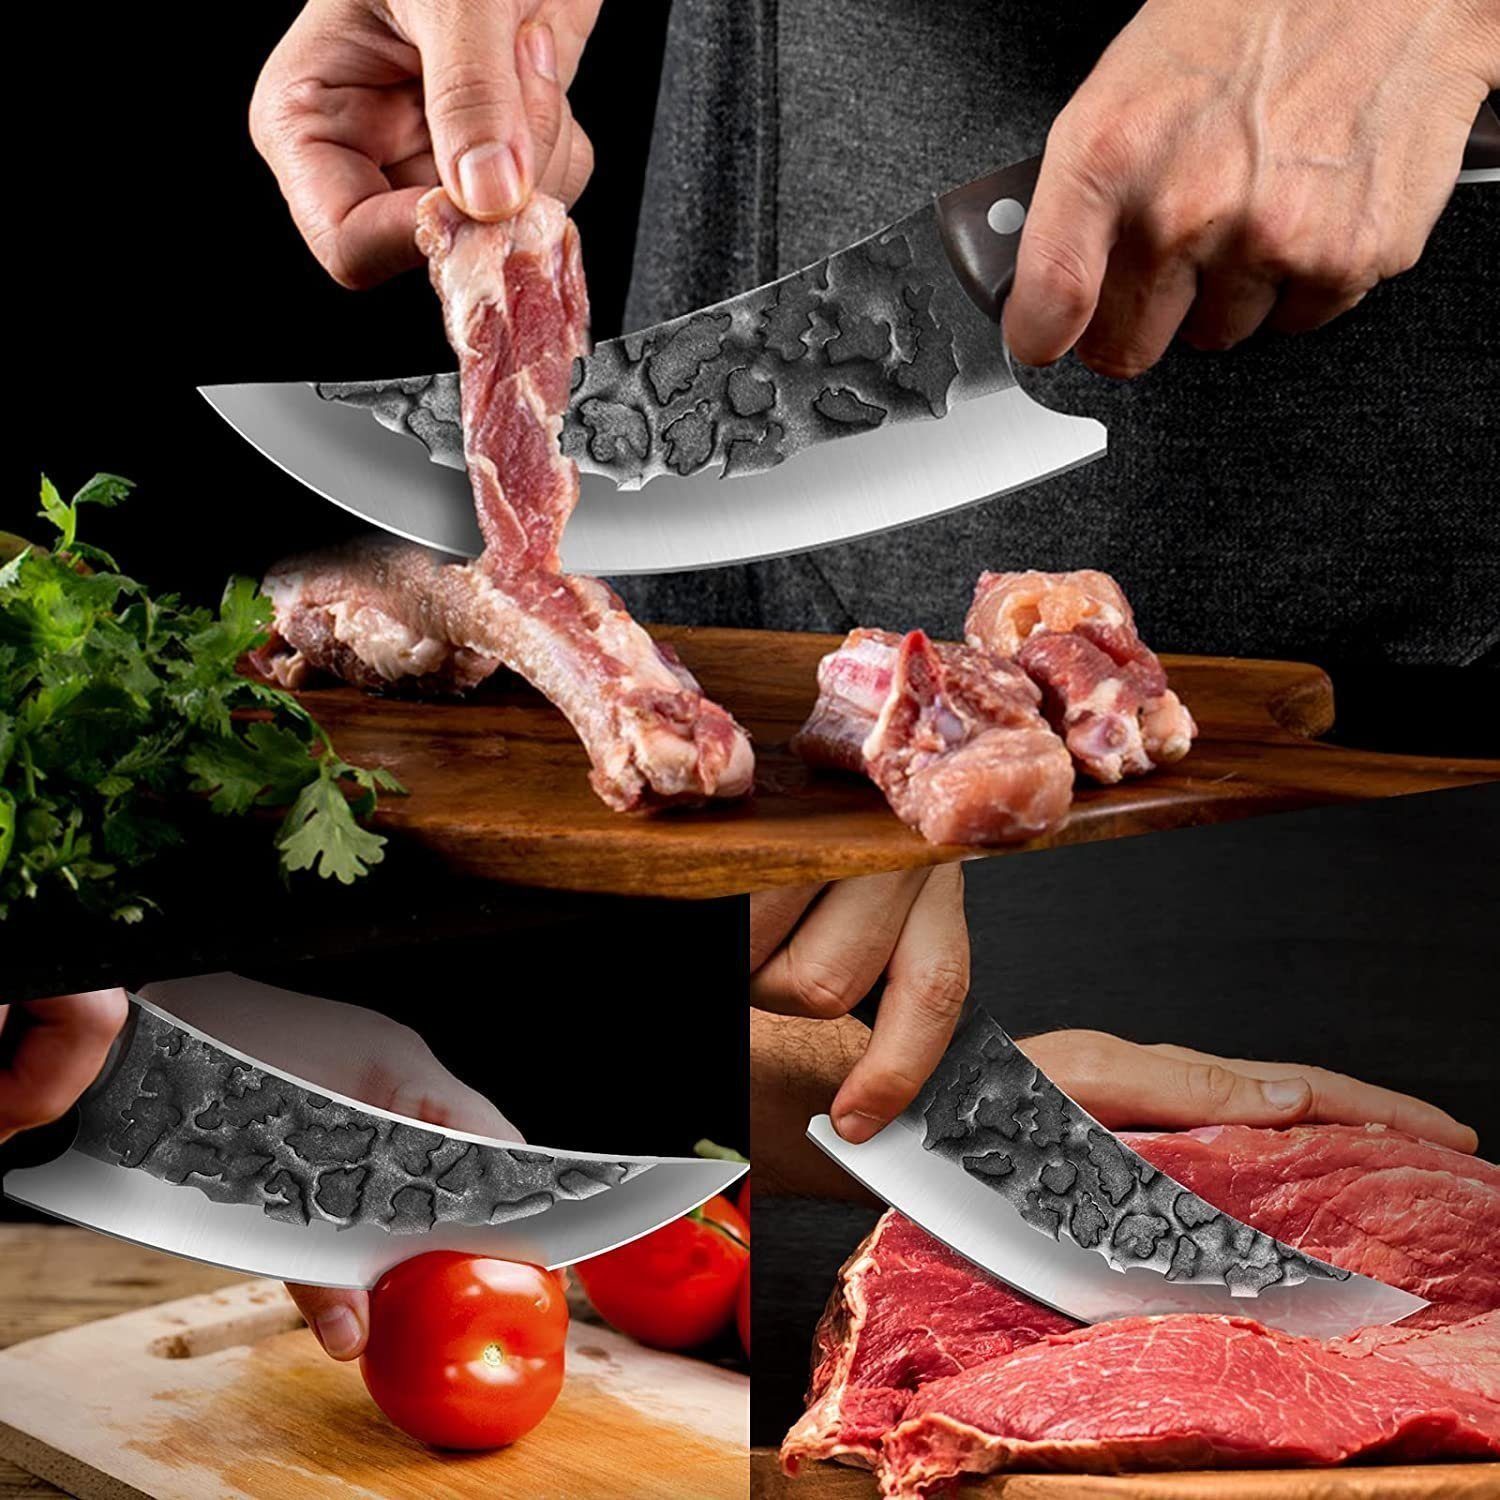 Messer Handgeschmiedet Outdoor Grillmesser Chefmesser KEENZO Messer Ausbeinmesser Wikinger